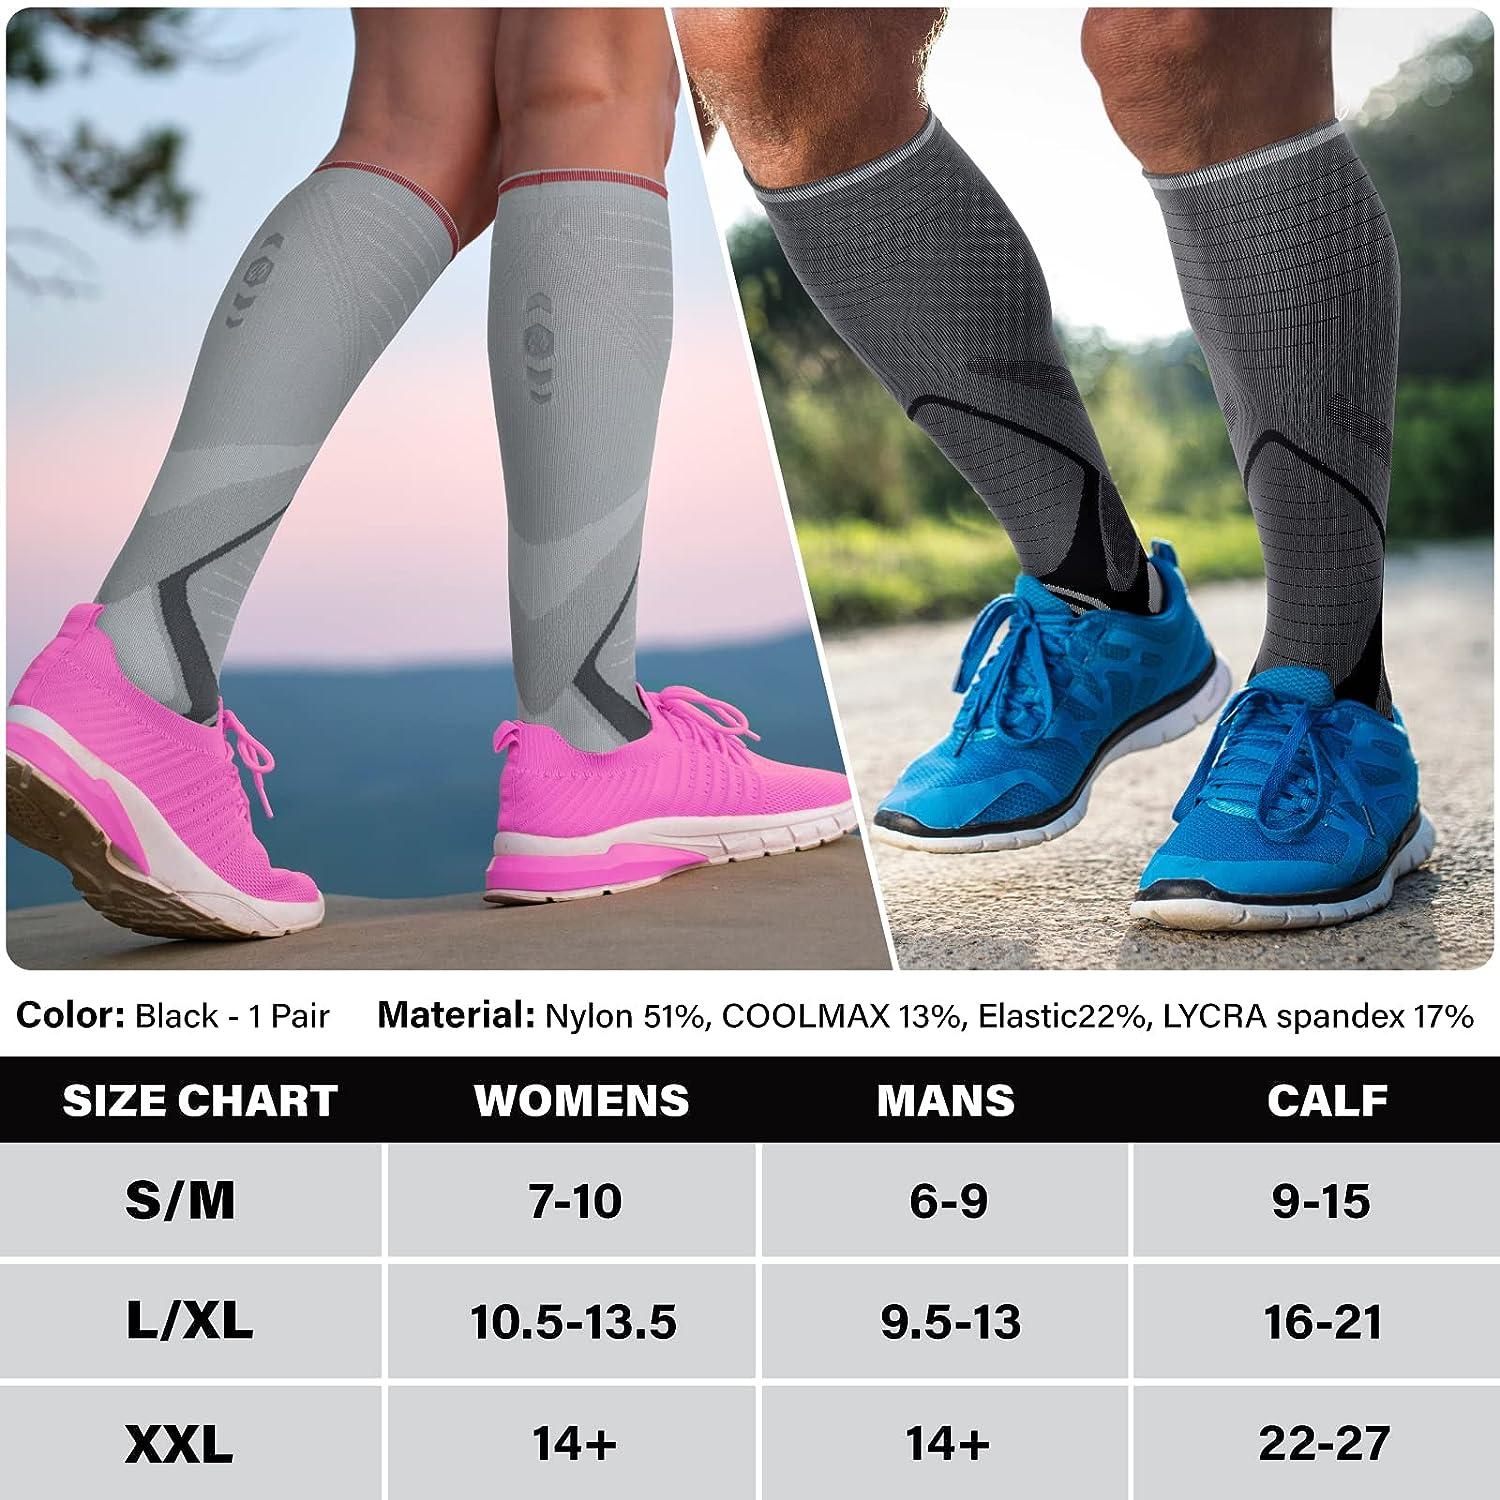 Sports Compression Calf Sleeves (20-30mmHg) for Men & Women -Leg Shin  Splints Socks - For Running, Shin Splint, Medical, Travel